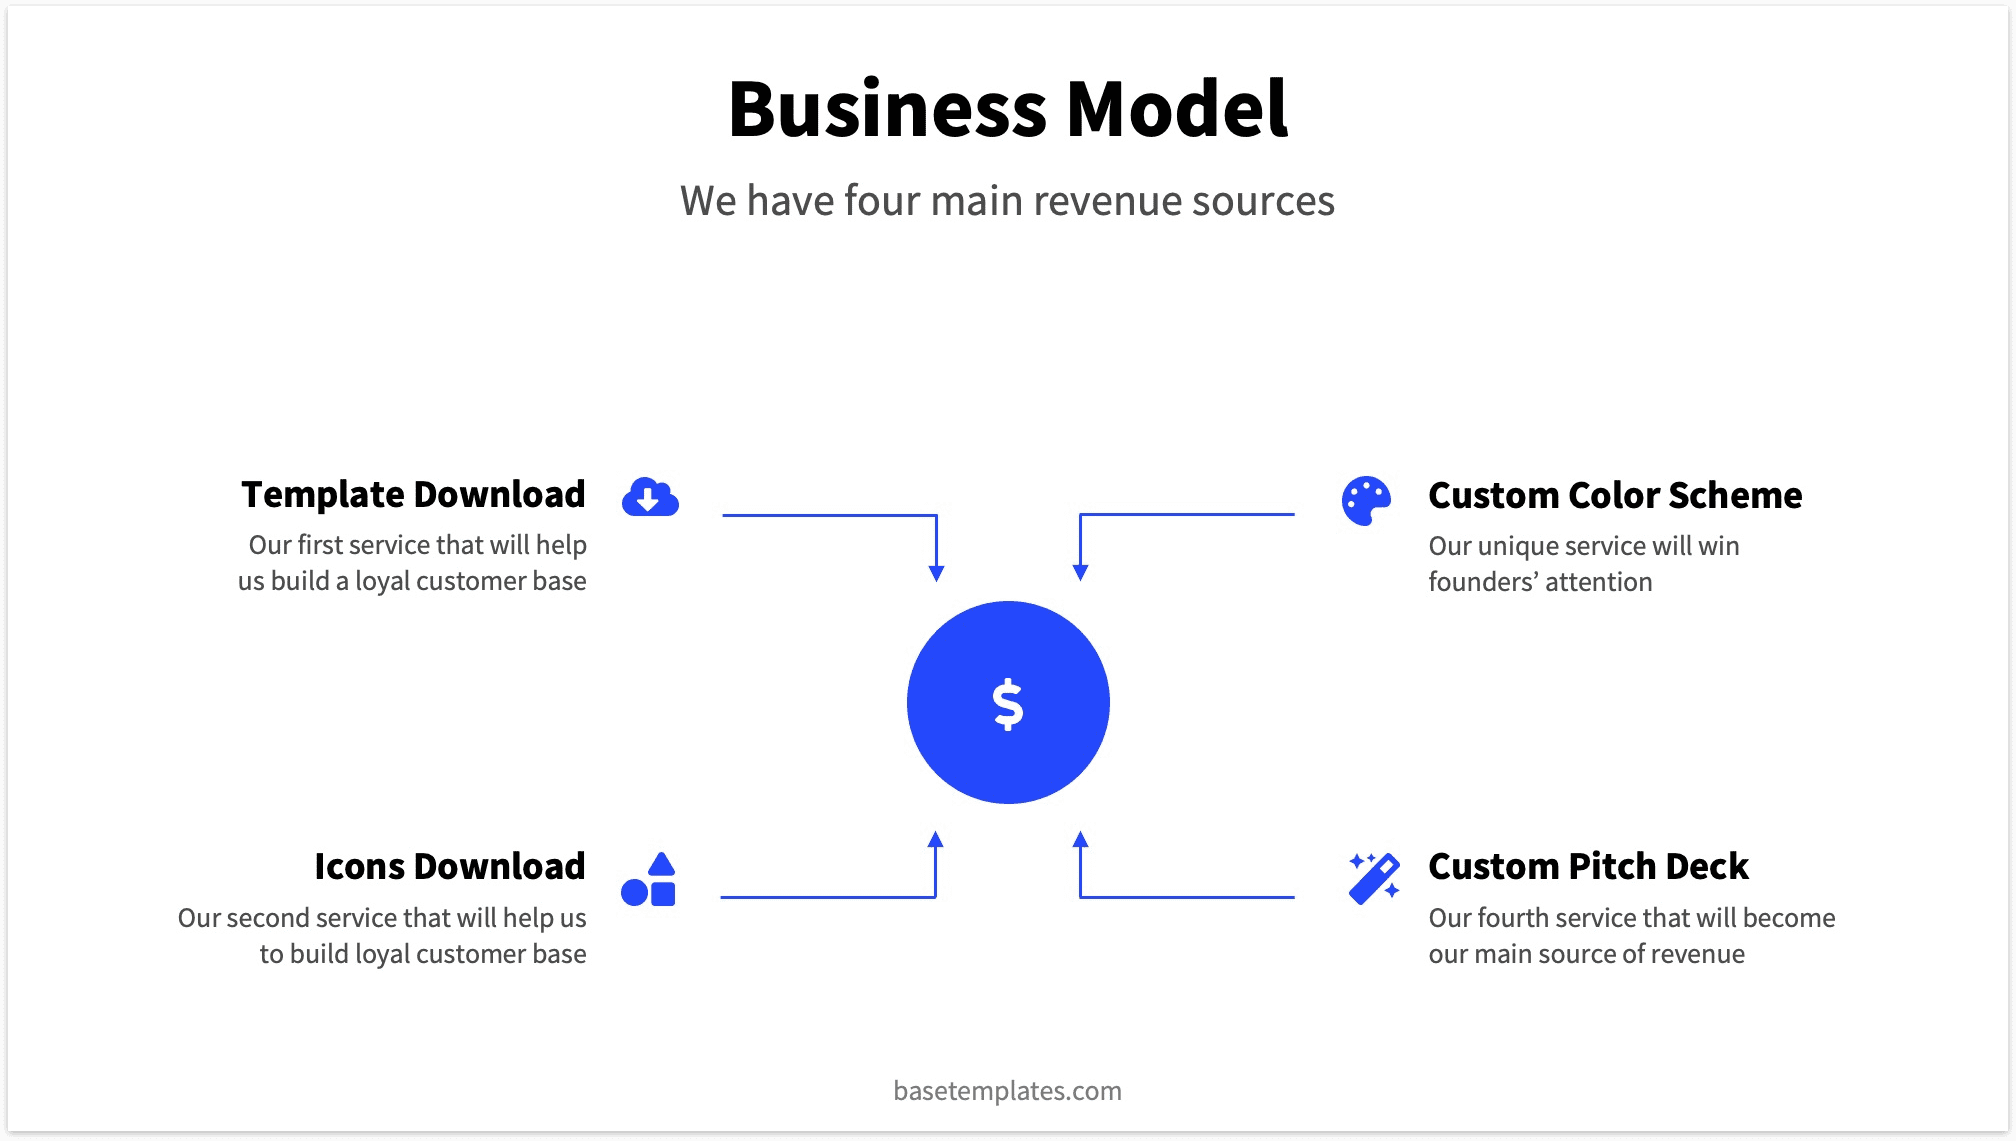 Business Model Slide Powerpoint Example BaseTemplates